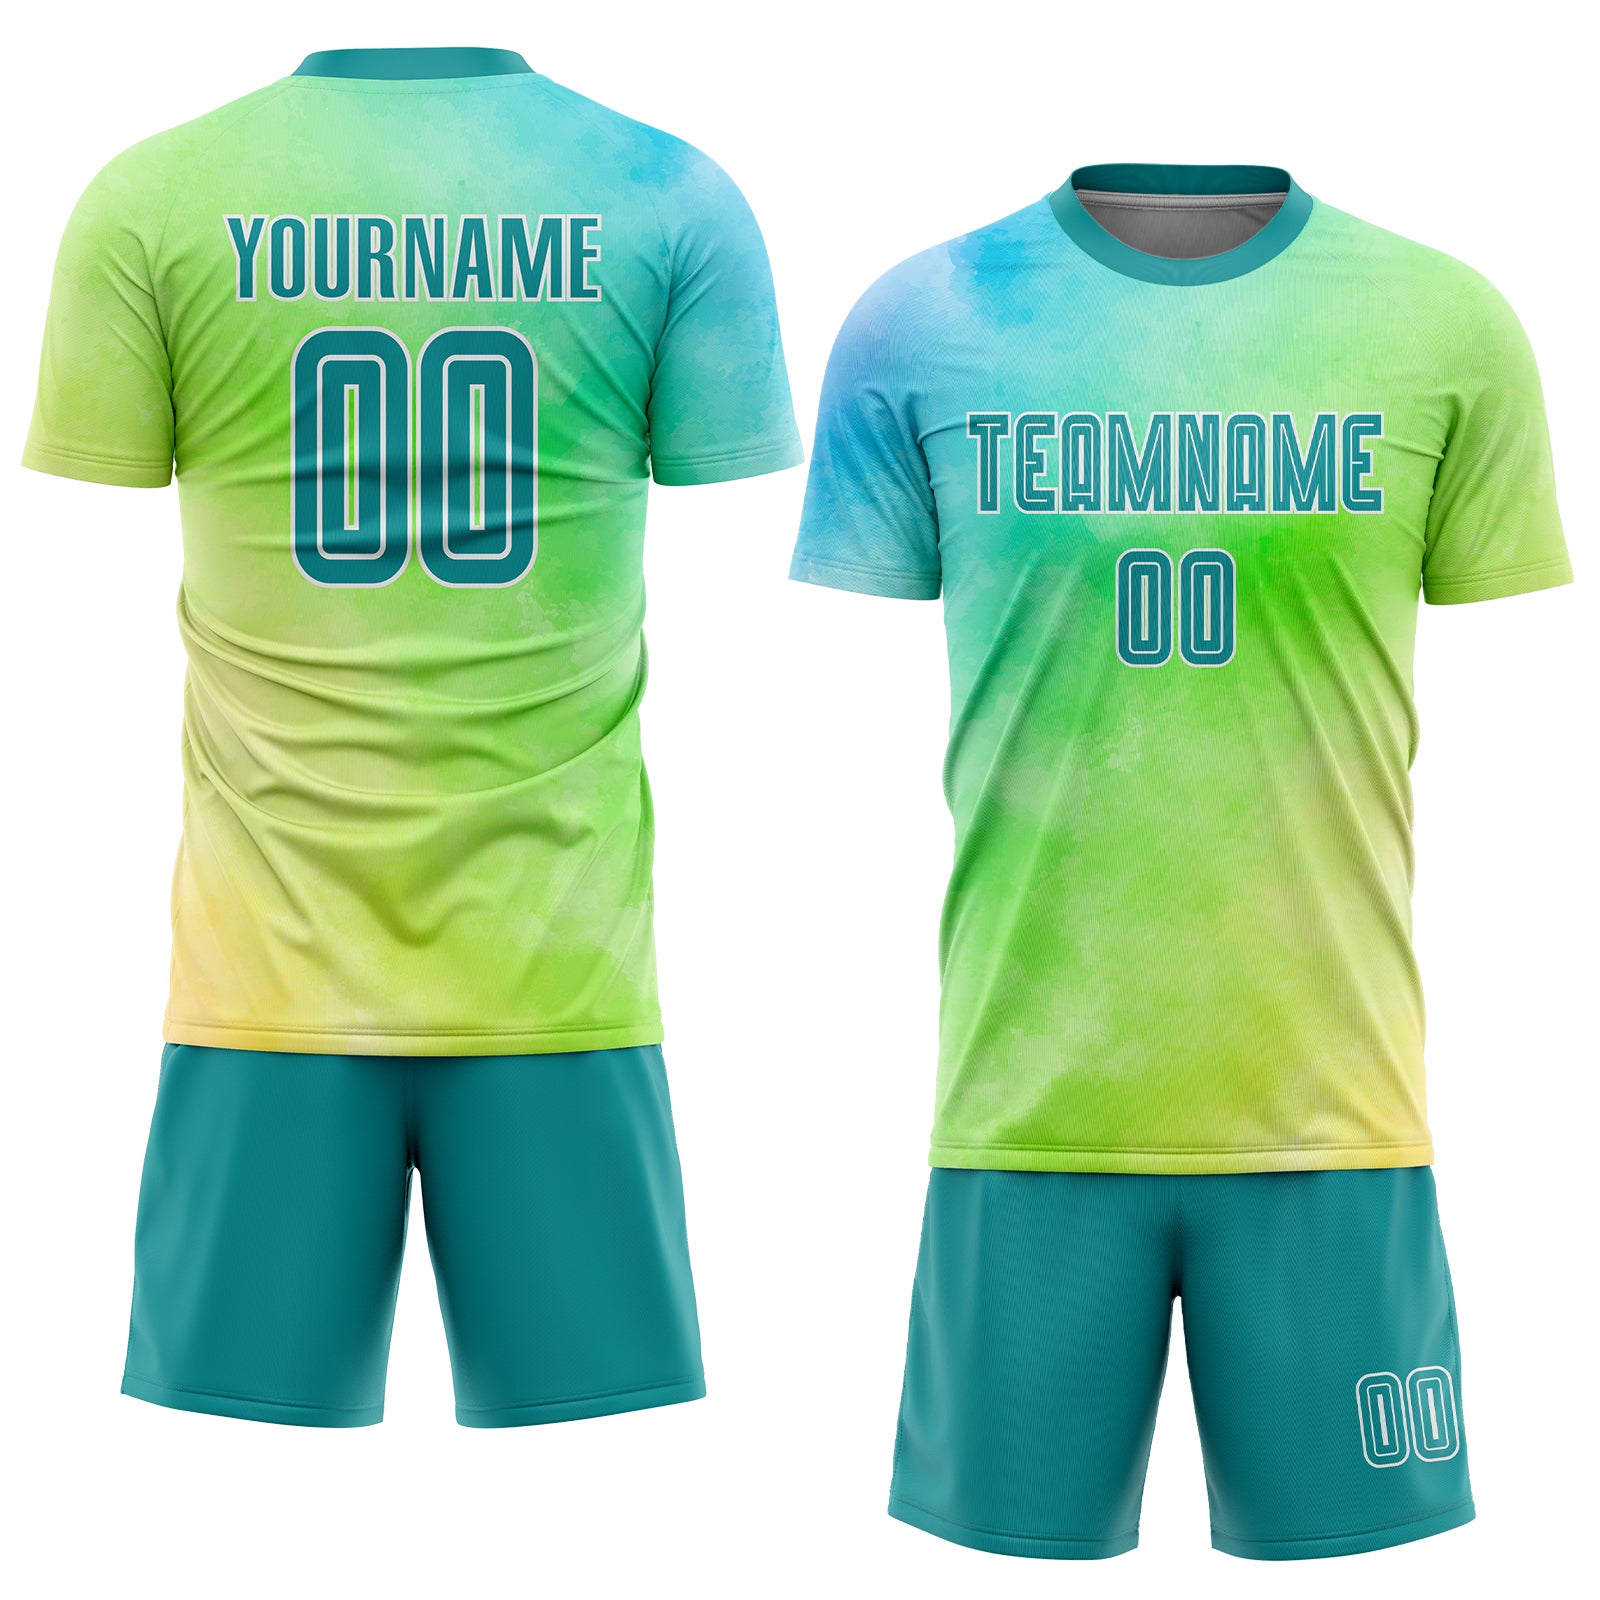 Custom Tie Dye Aqua-White Sublimation Soccer Uniform Jersey